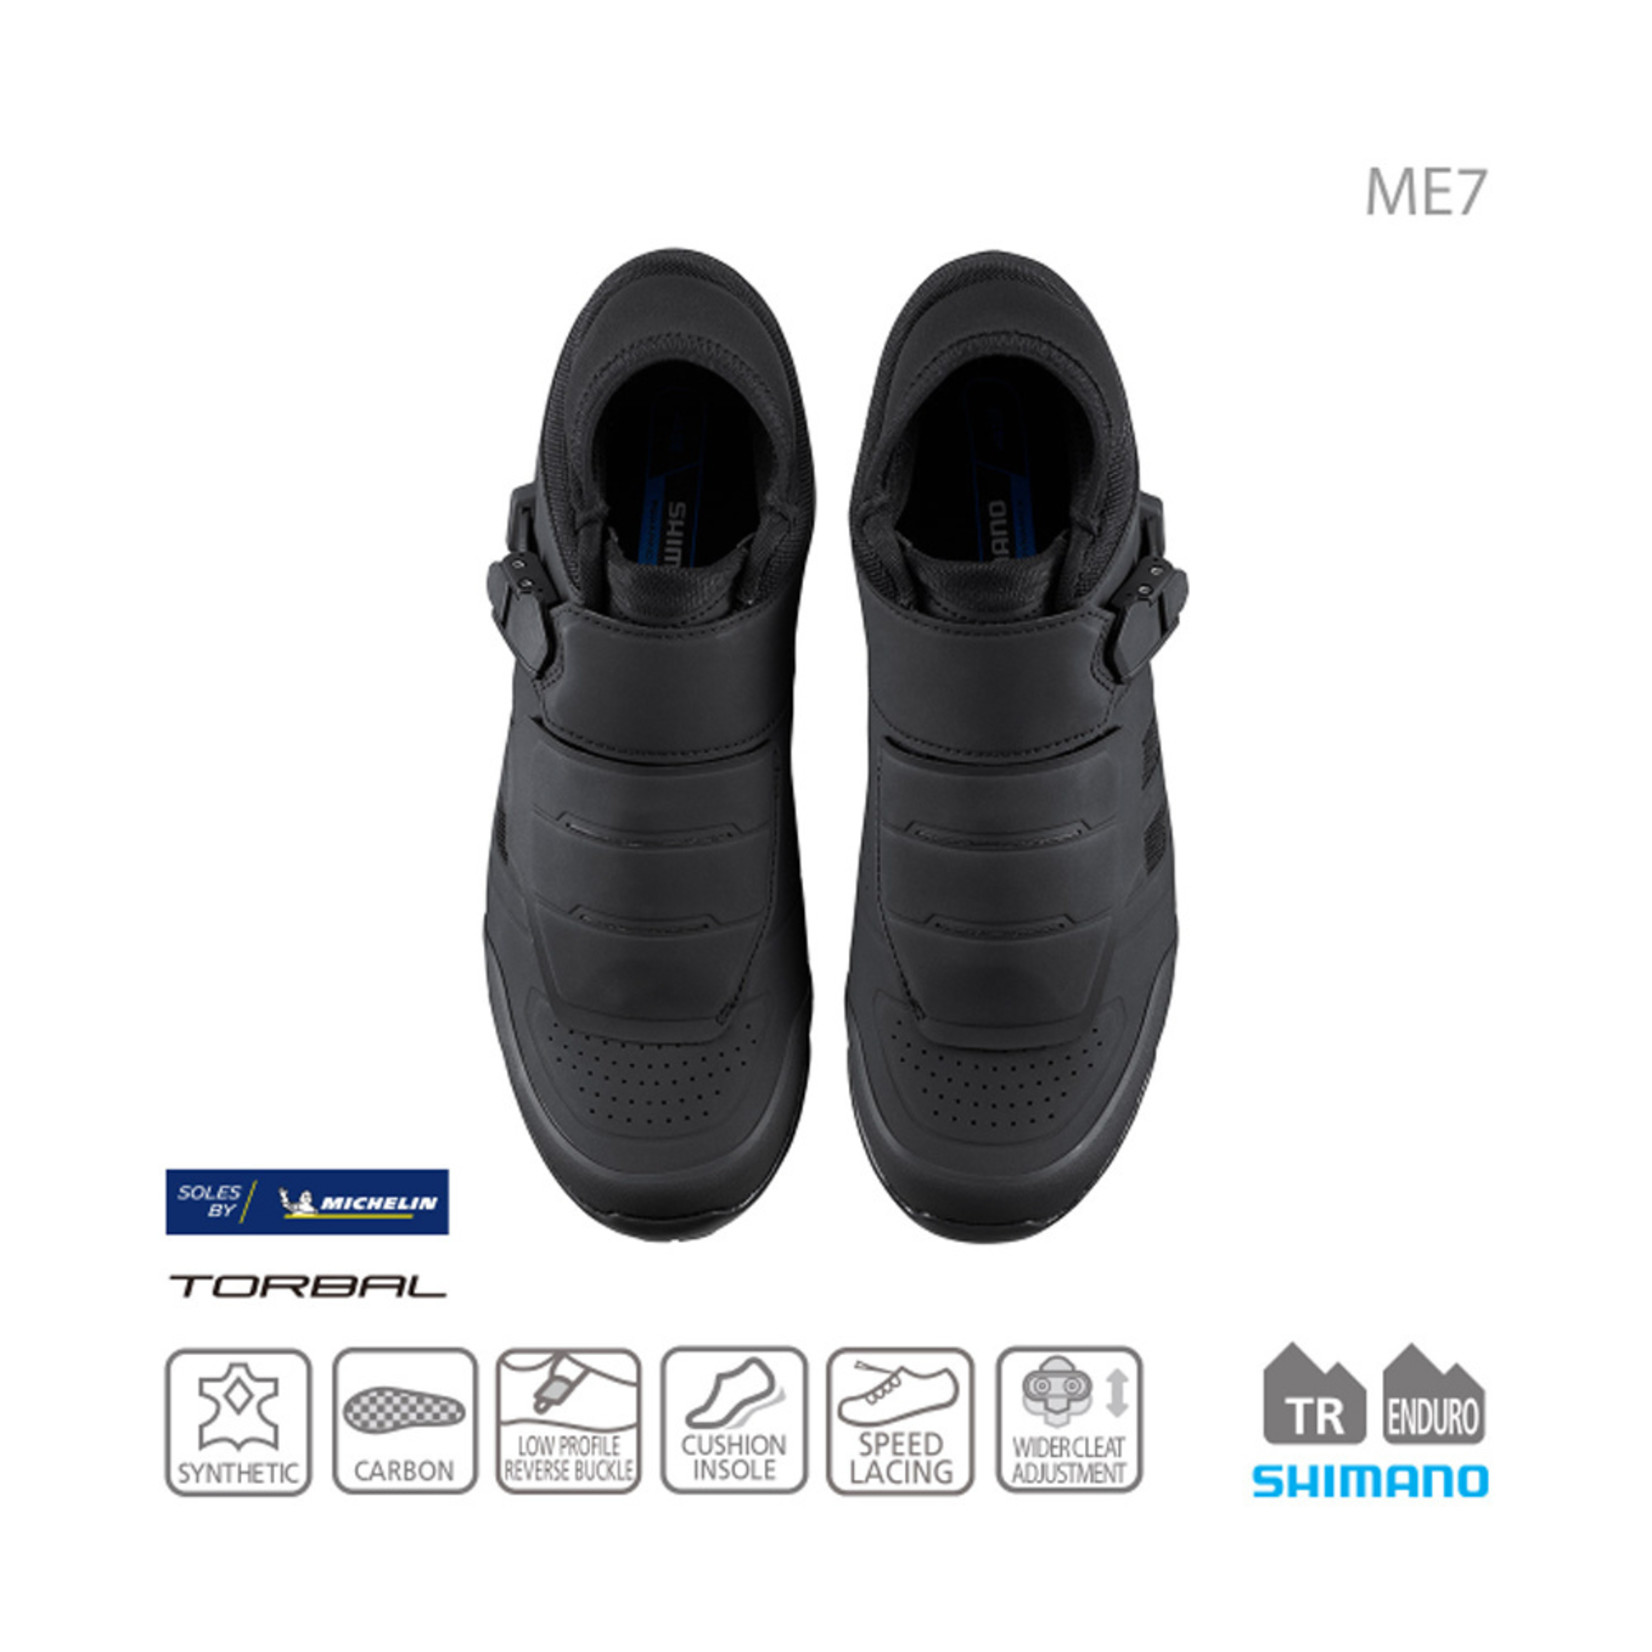 Shimano Shimano SH-ME702 SPD Cycling Shoes - Black Material Synthetic